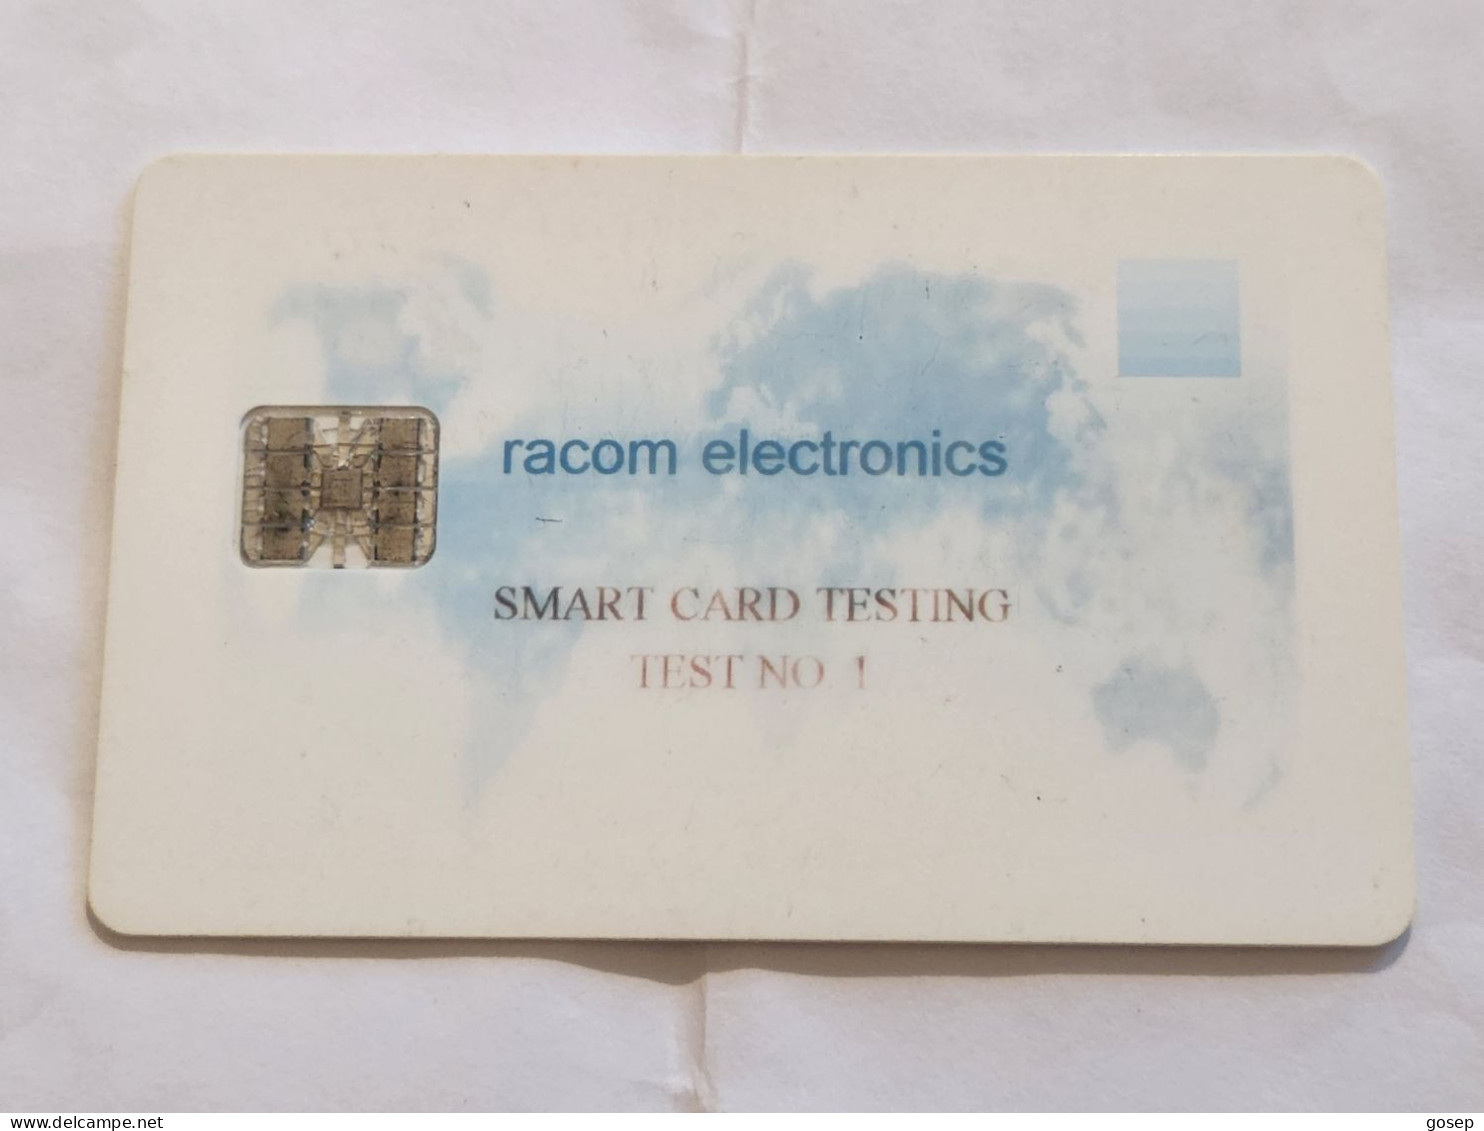 ISRAEL-RACOM ELECTRONICS-SMART CARD TESTING TEST NO-1-EXPANSIVE CARD+5CARD PREPIAD FREE - Israel